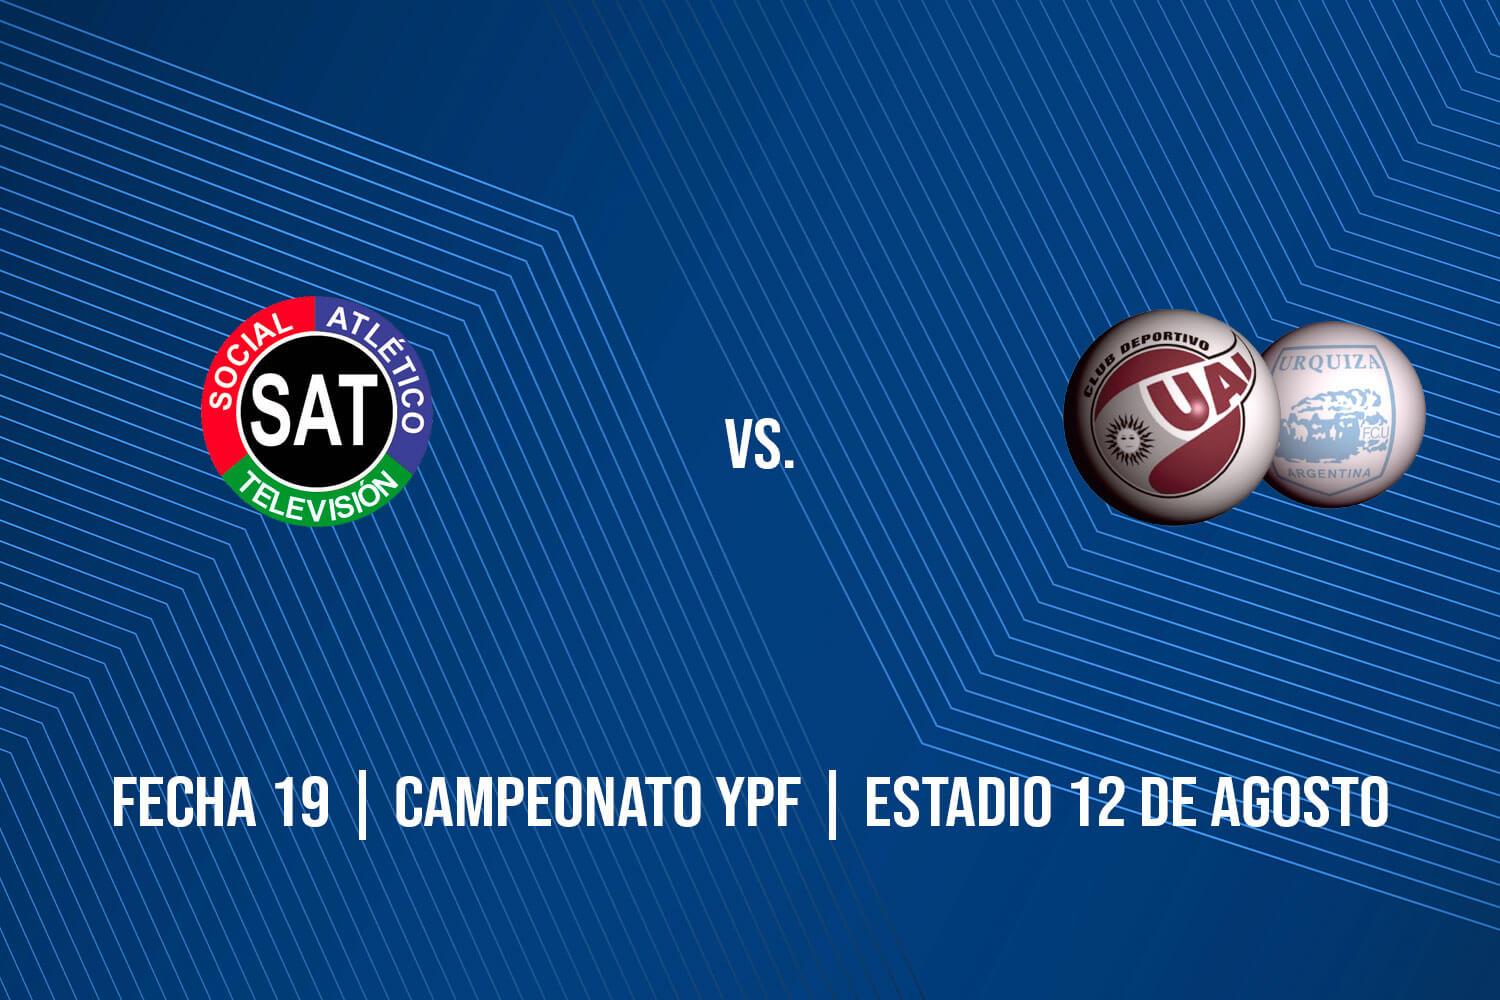 Club Comunicaciones vs UAI Urquiza» Predictions, Odds, Live Score